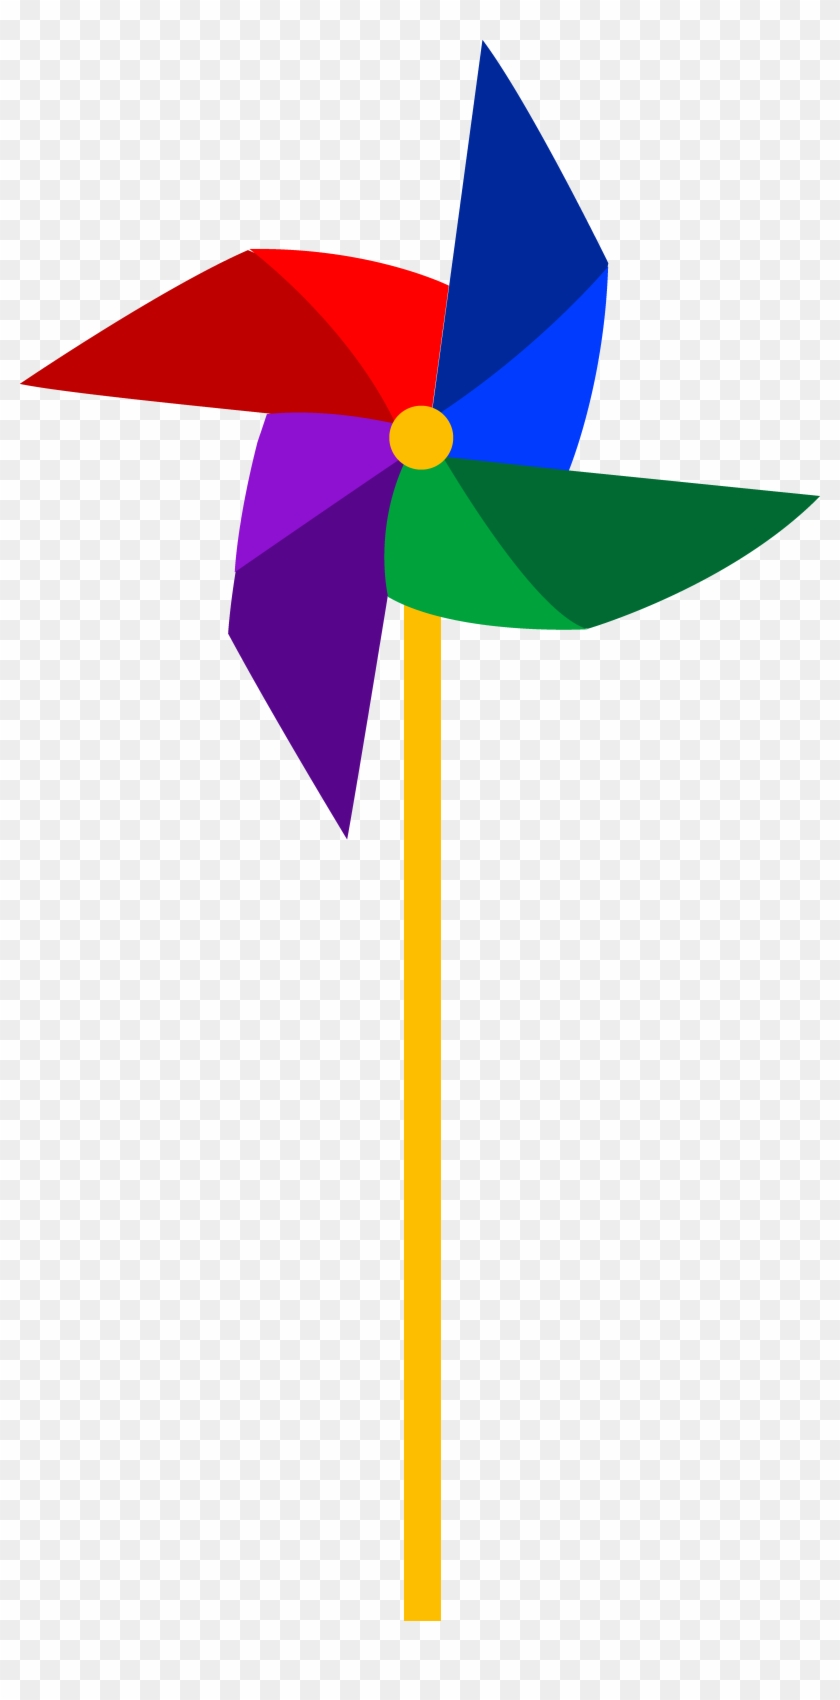 Clip Art Of A Colorful Pinwheel Toy - Pinwheel Toy #161536